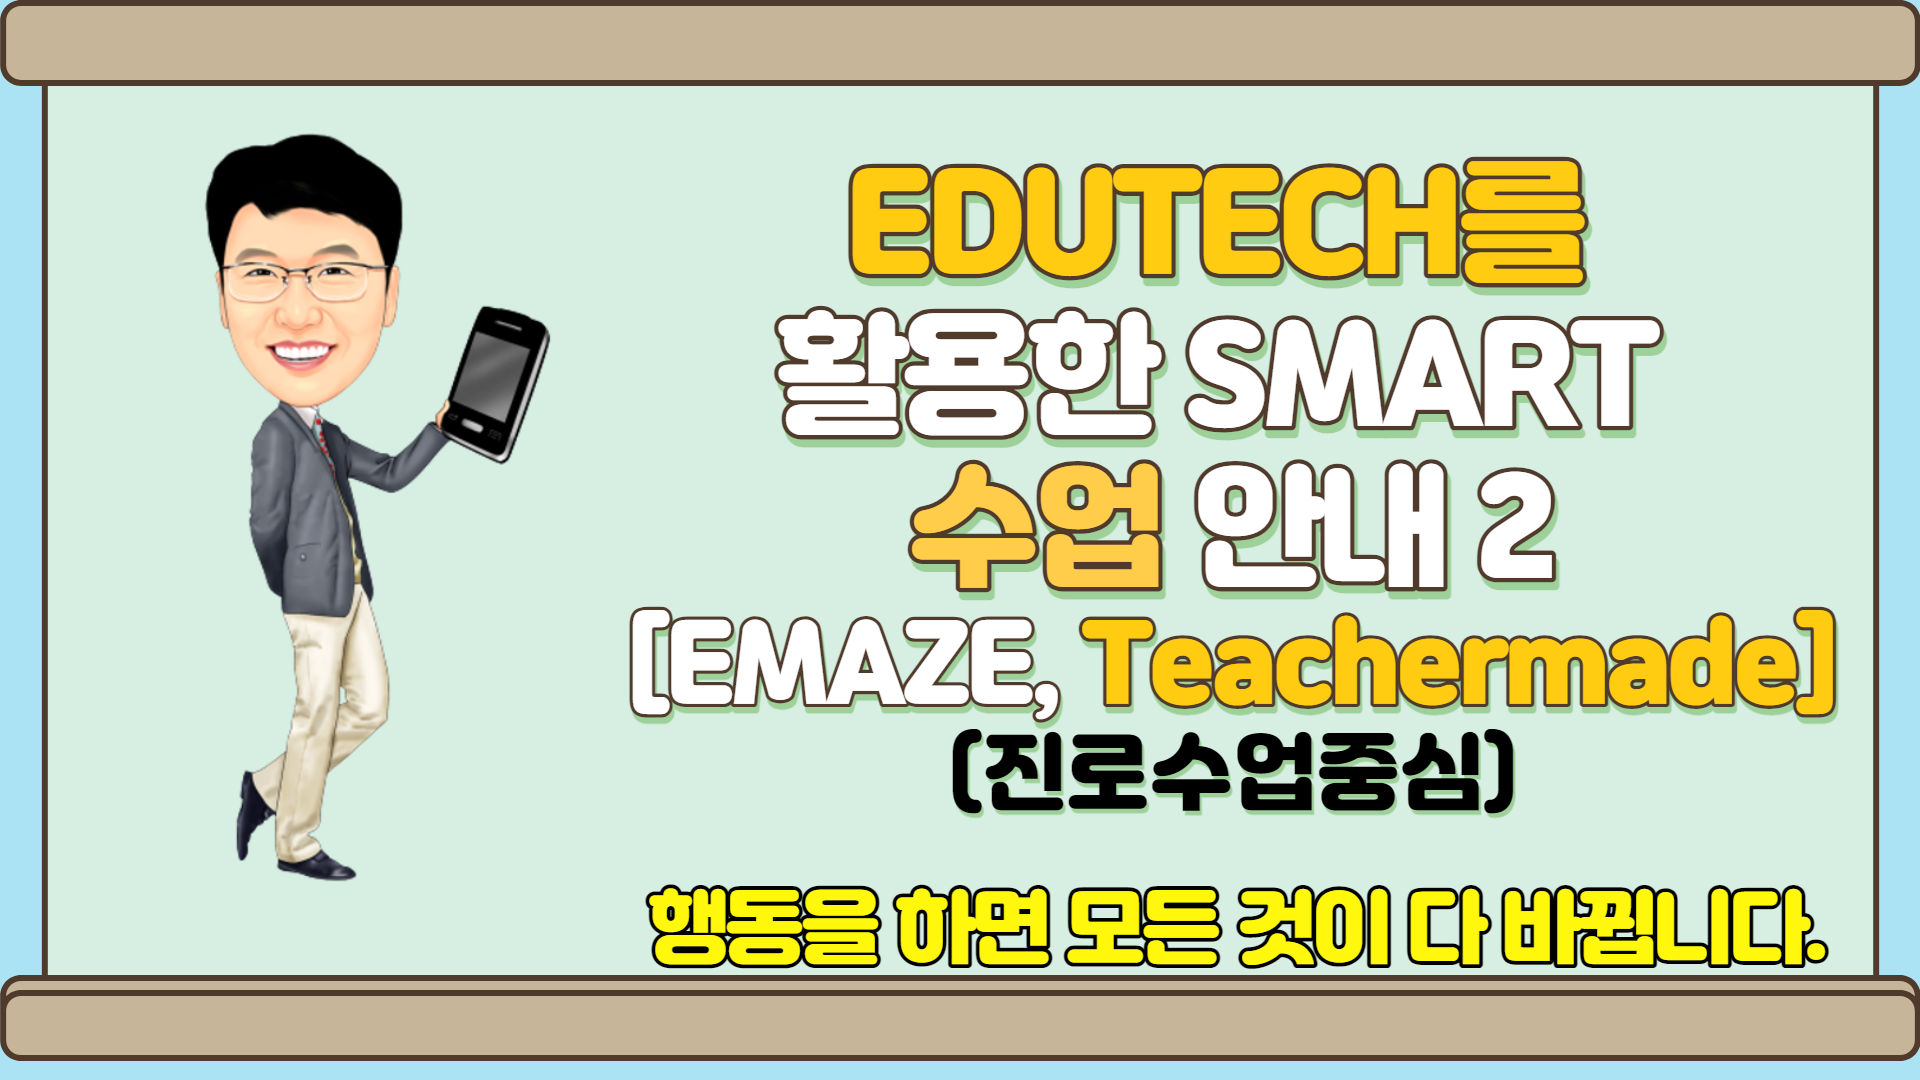 EDUTECH를 활용한 smart 수업 방법 안내 2(진로수업을 중심으로)(Teachermade,Emaze)